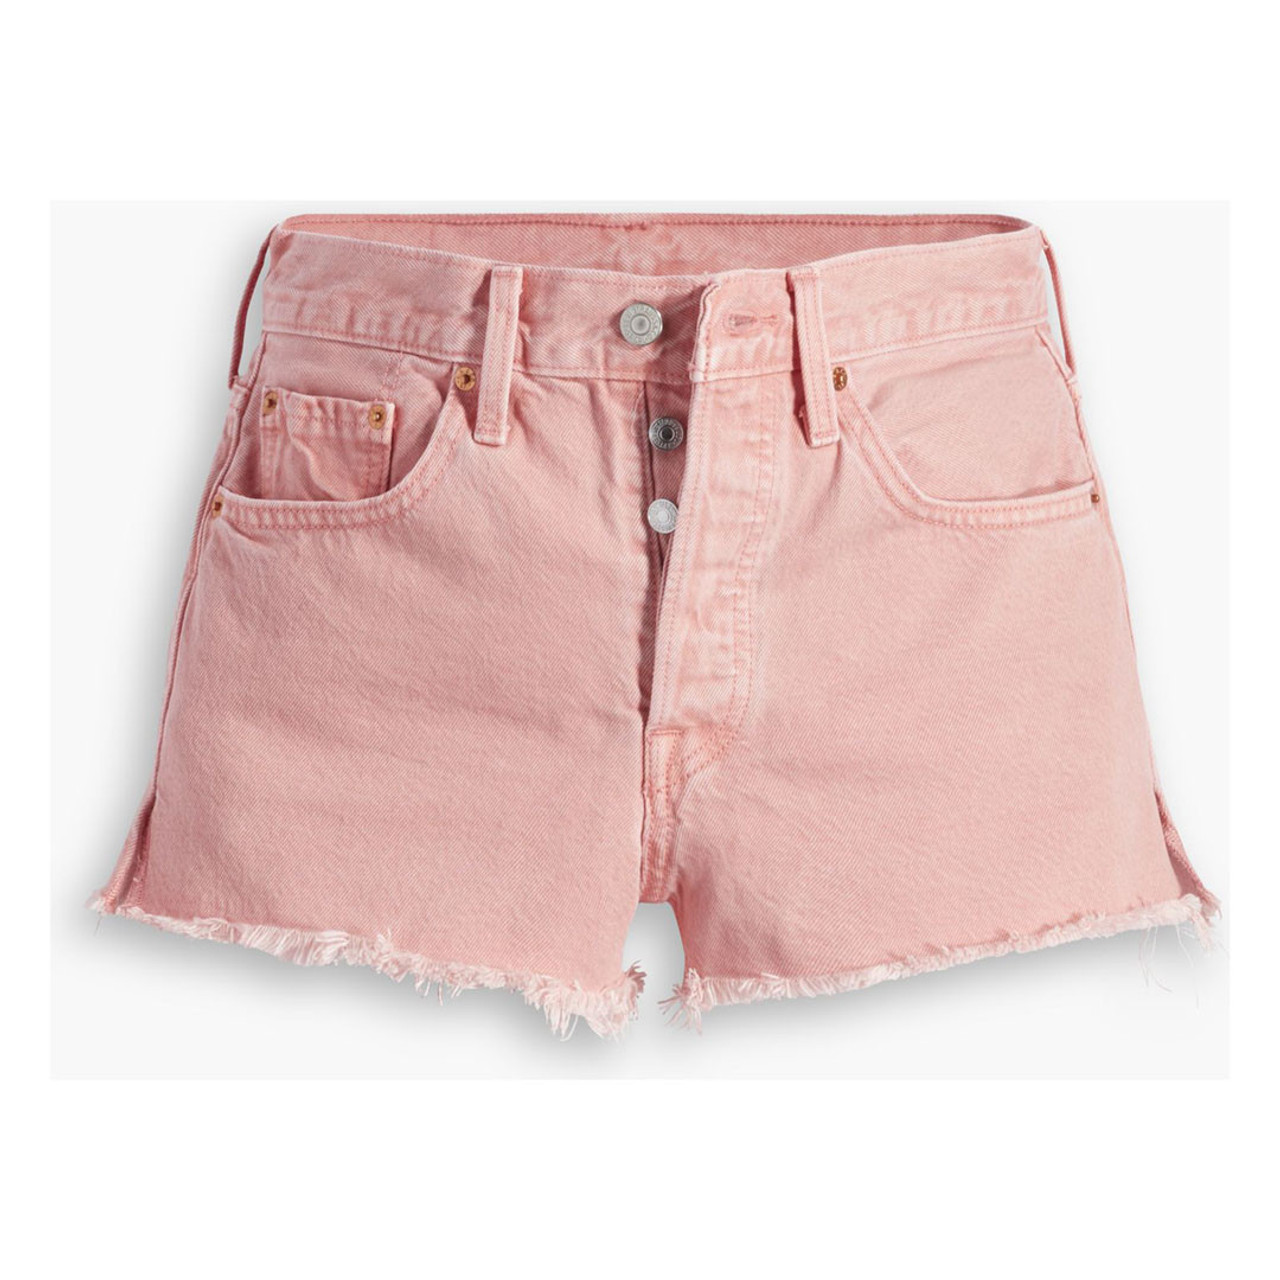 Levi's Women's 501 Original Denim Shorts - Medium Pink Garment Dye